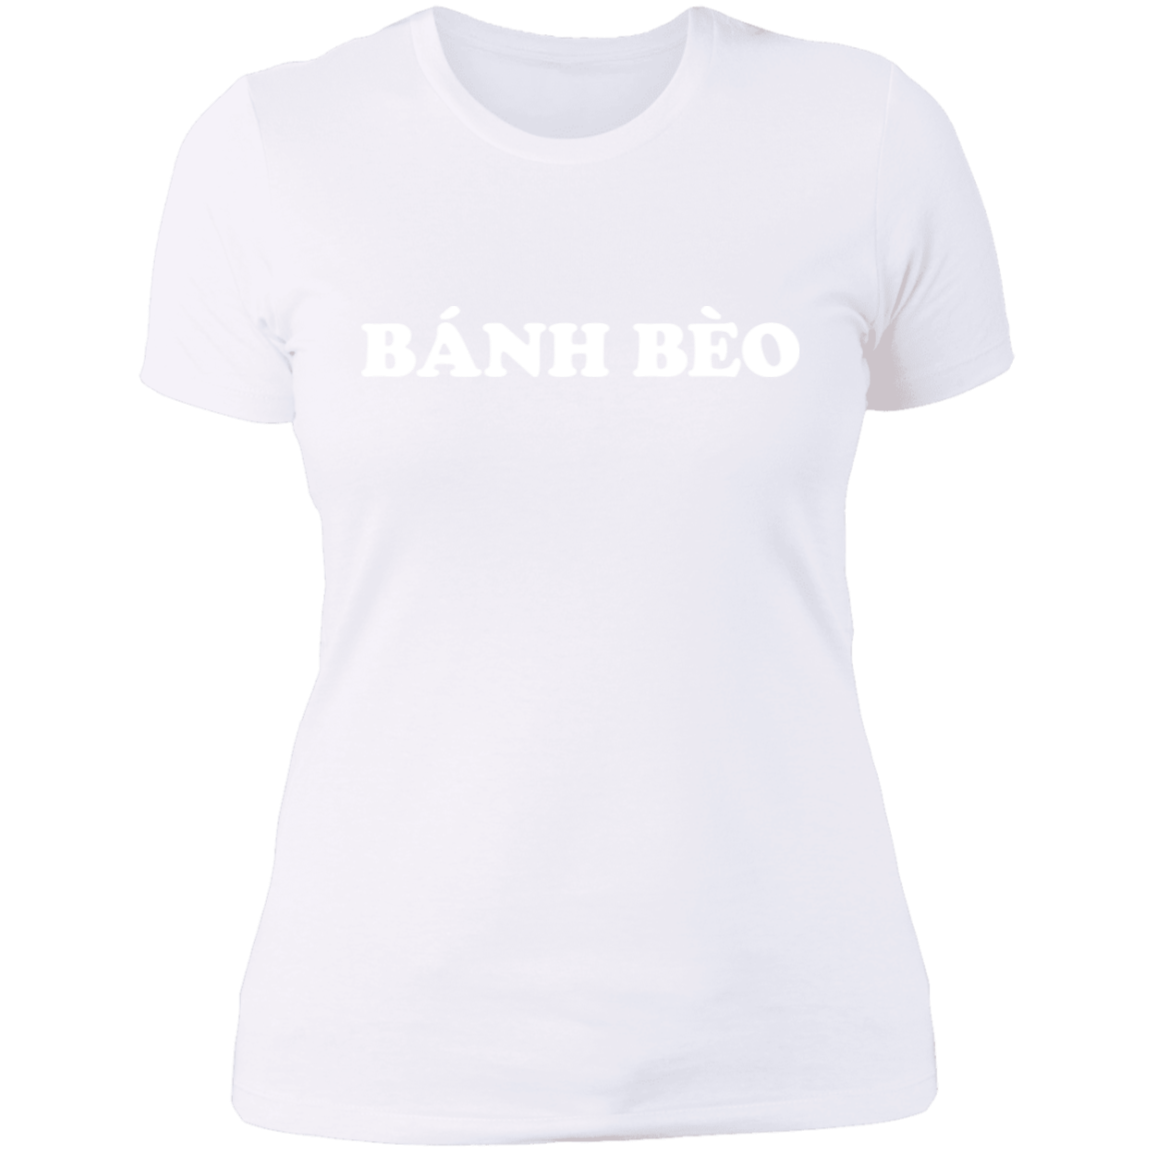 Banh Beo white